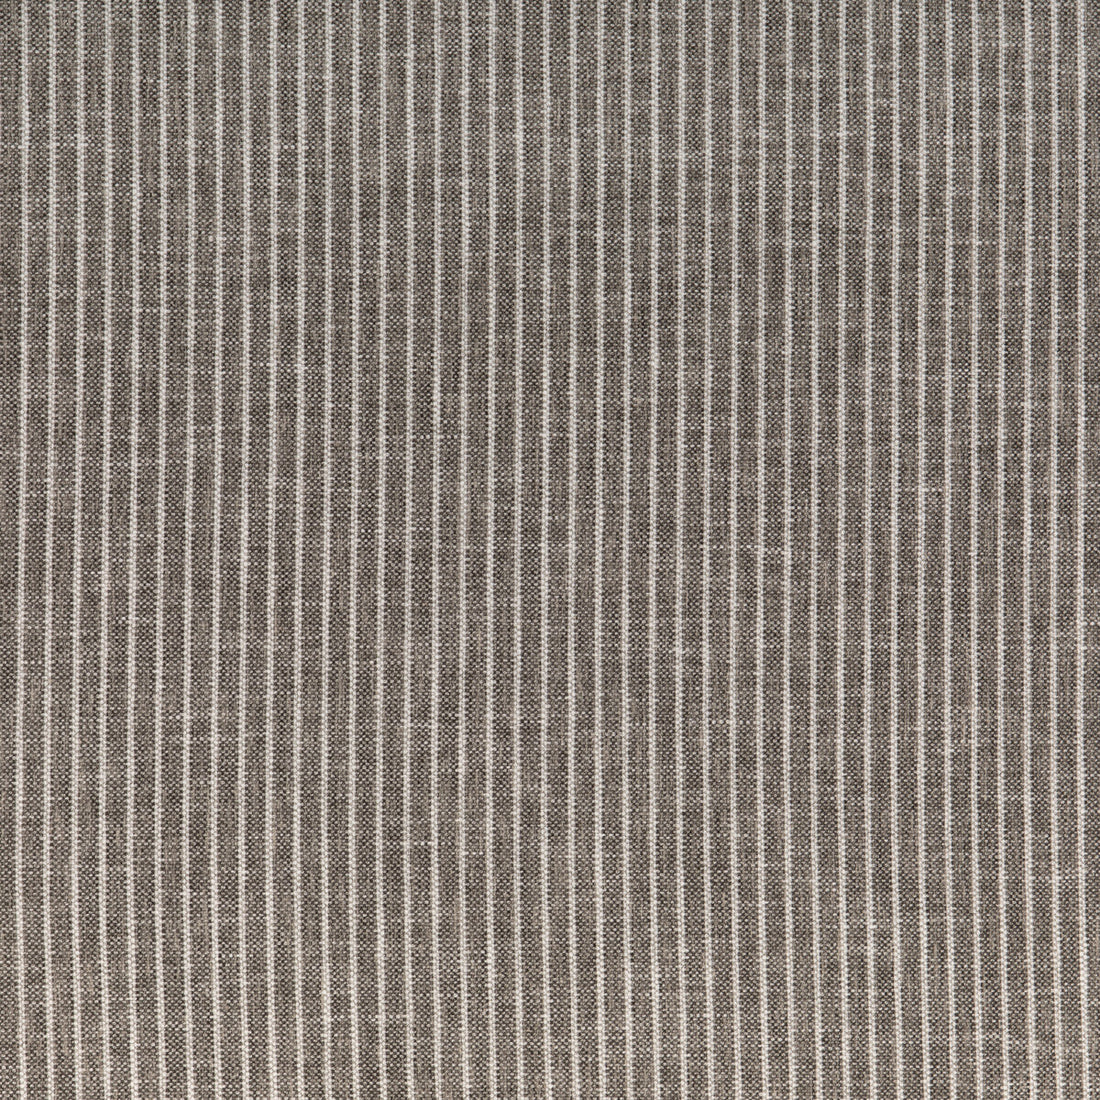 Kravet Smart fabric in 36655-1101 color - pattern 36655.1101.0 - by Kravet Smart in the Performance Kravetarmor collection